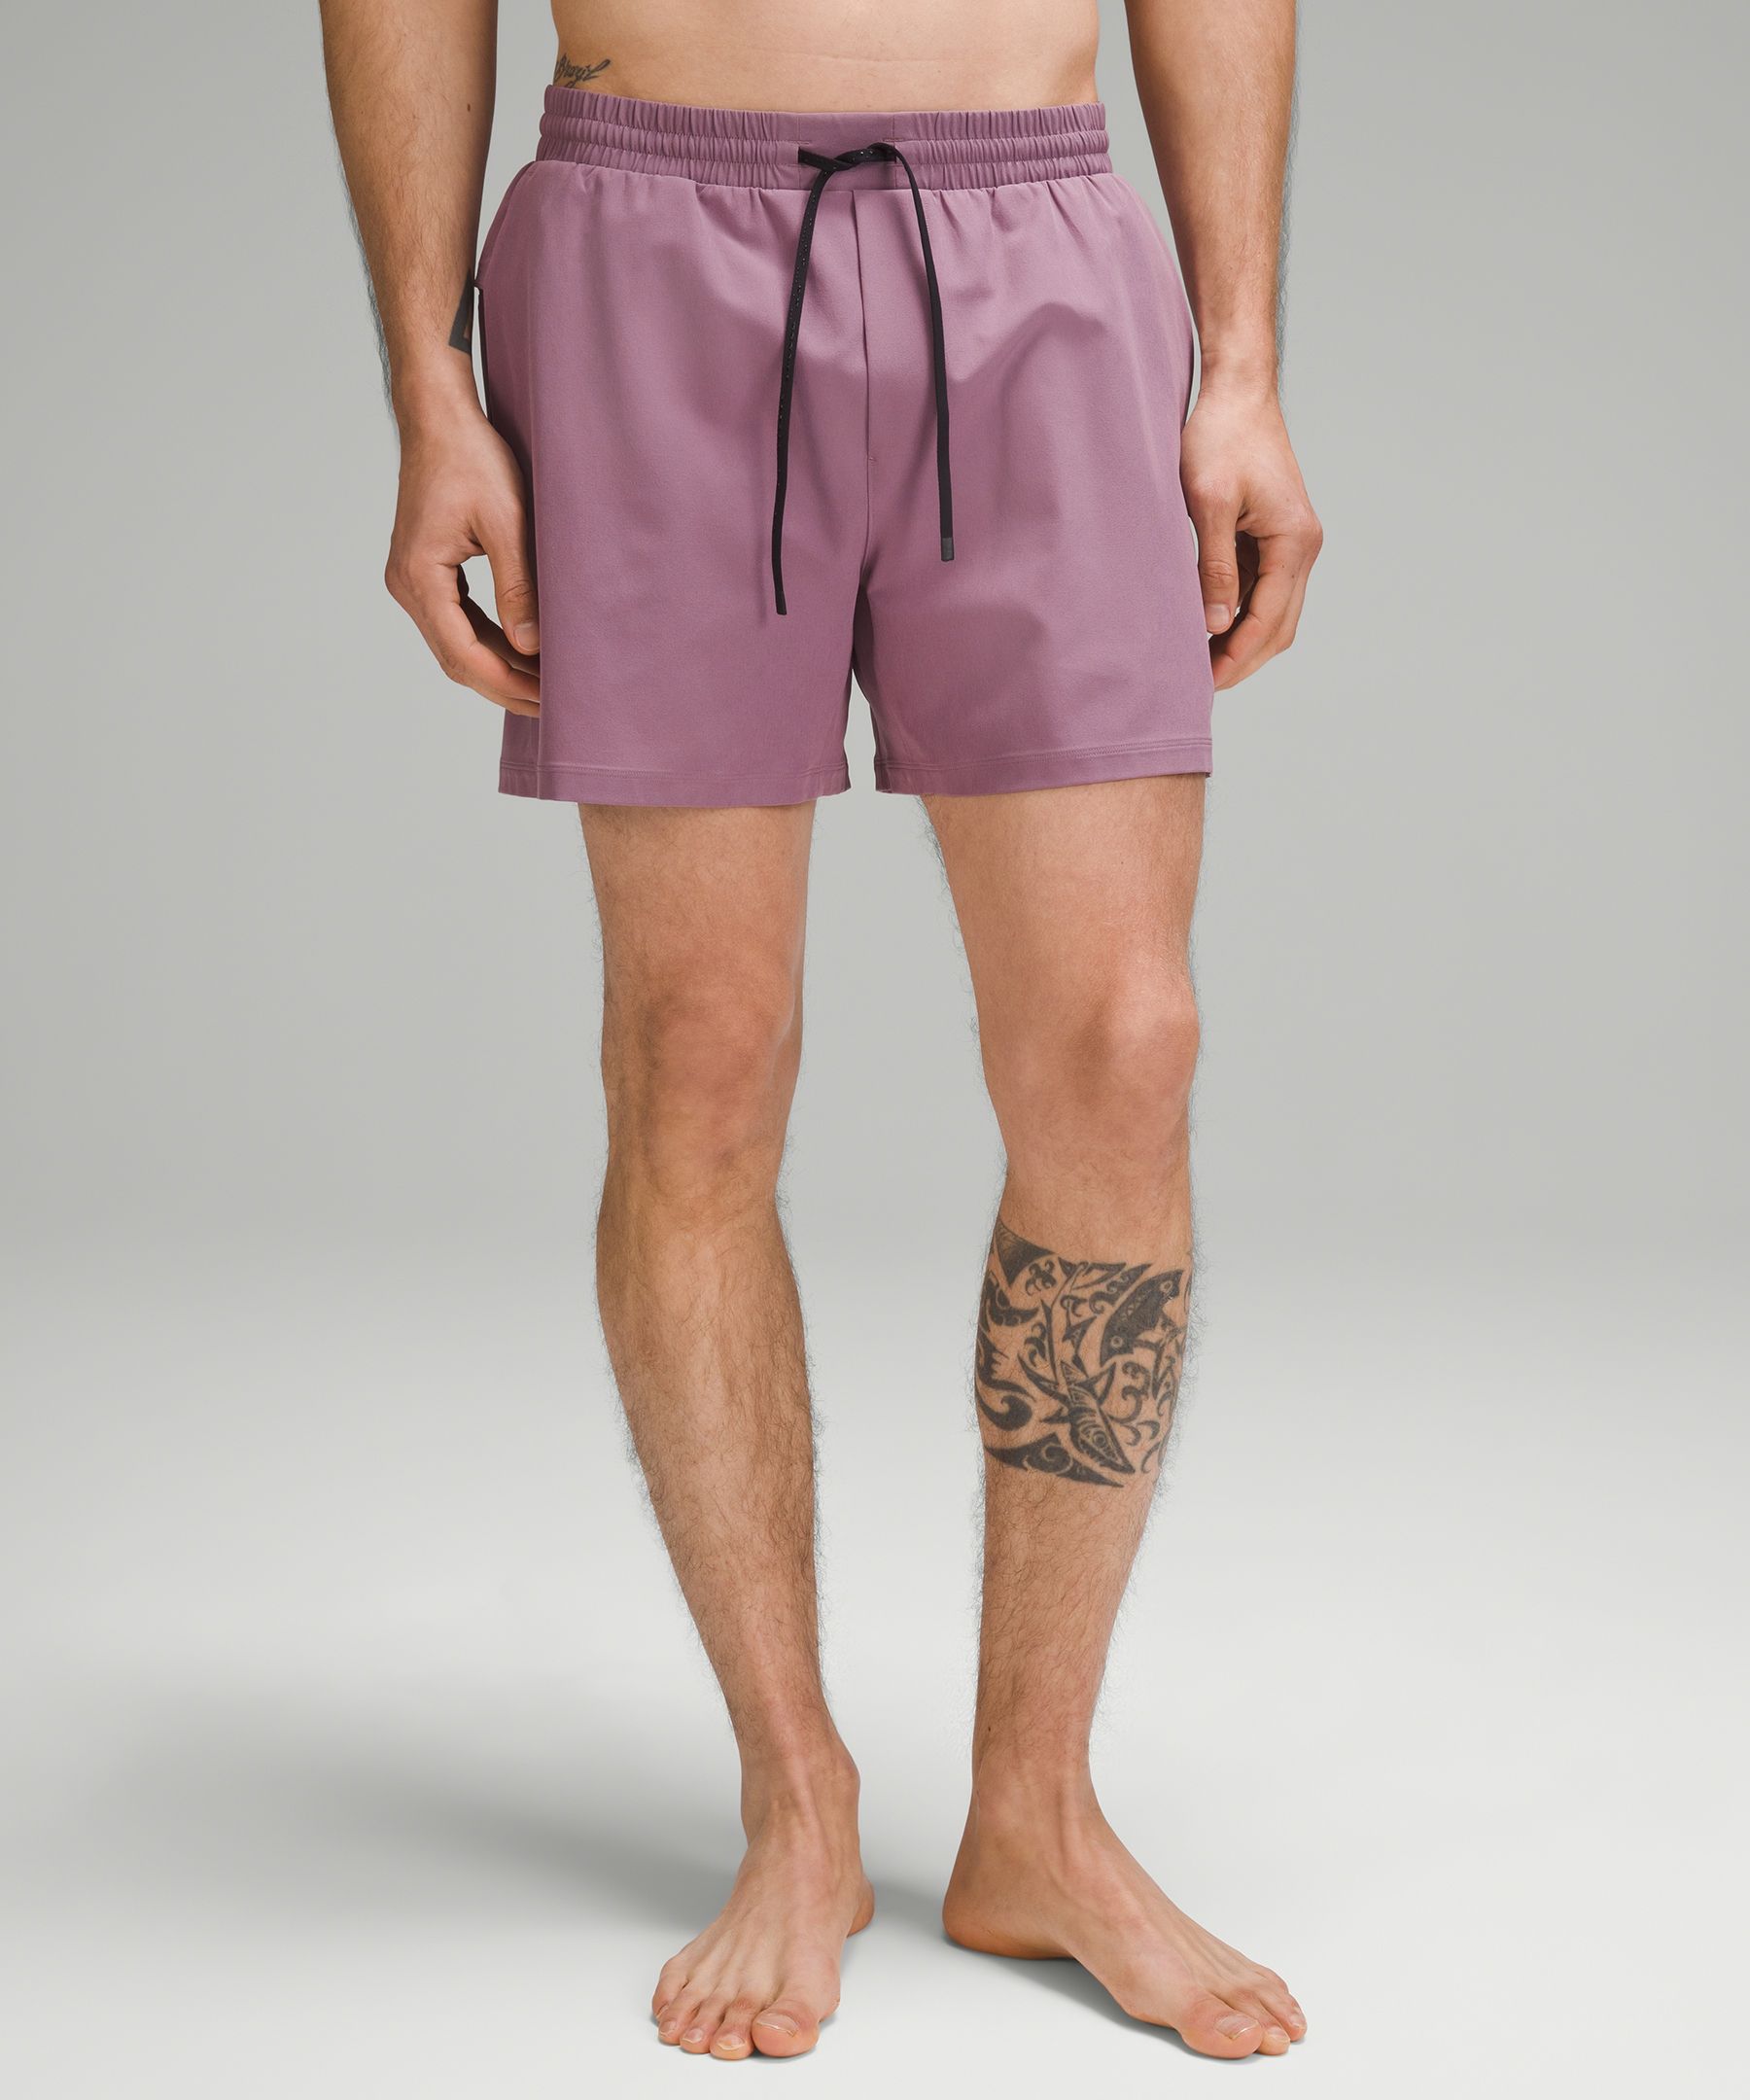 Lululemon Pool Shorts 5" Lined In Purple